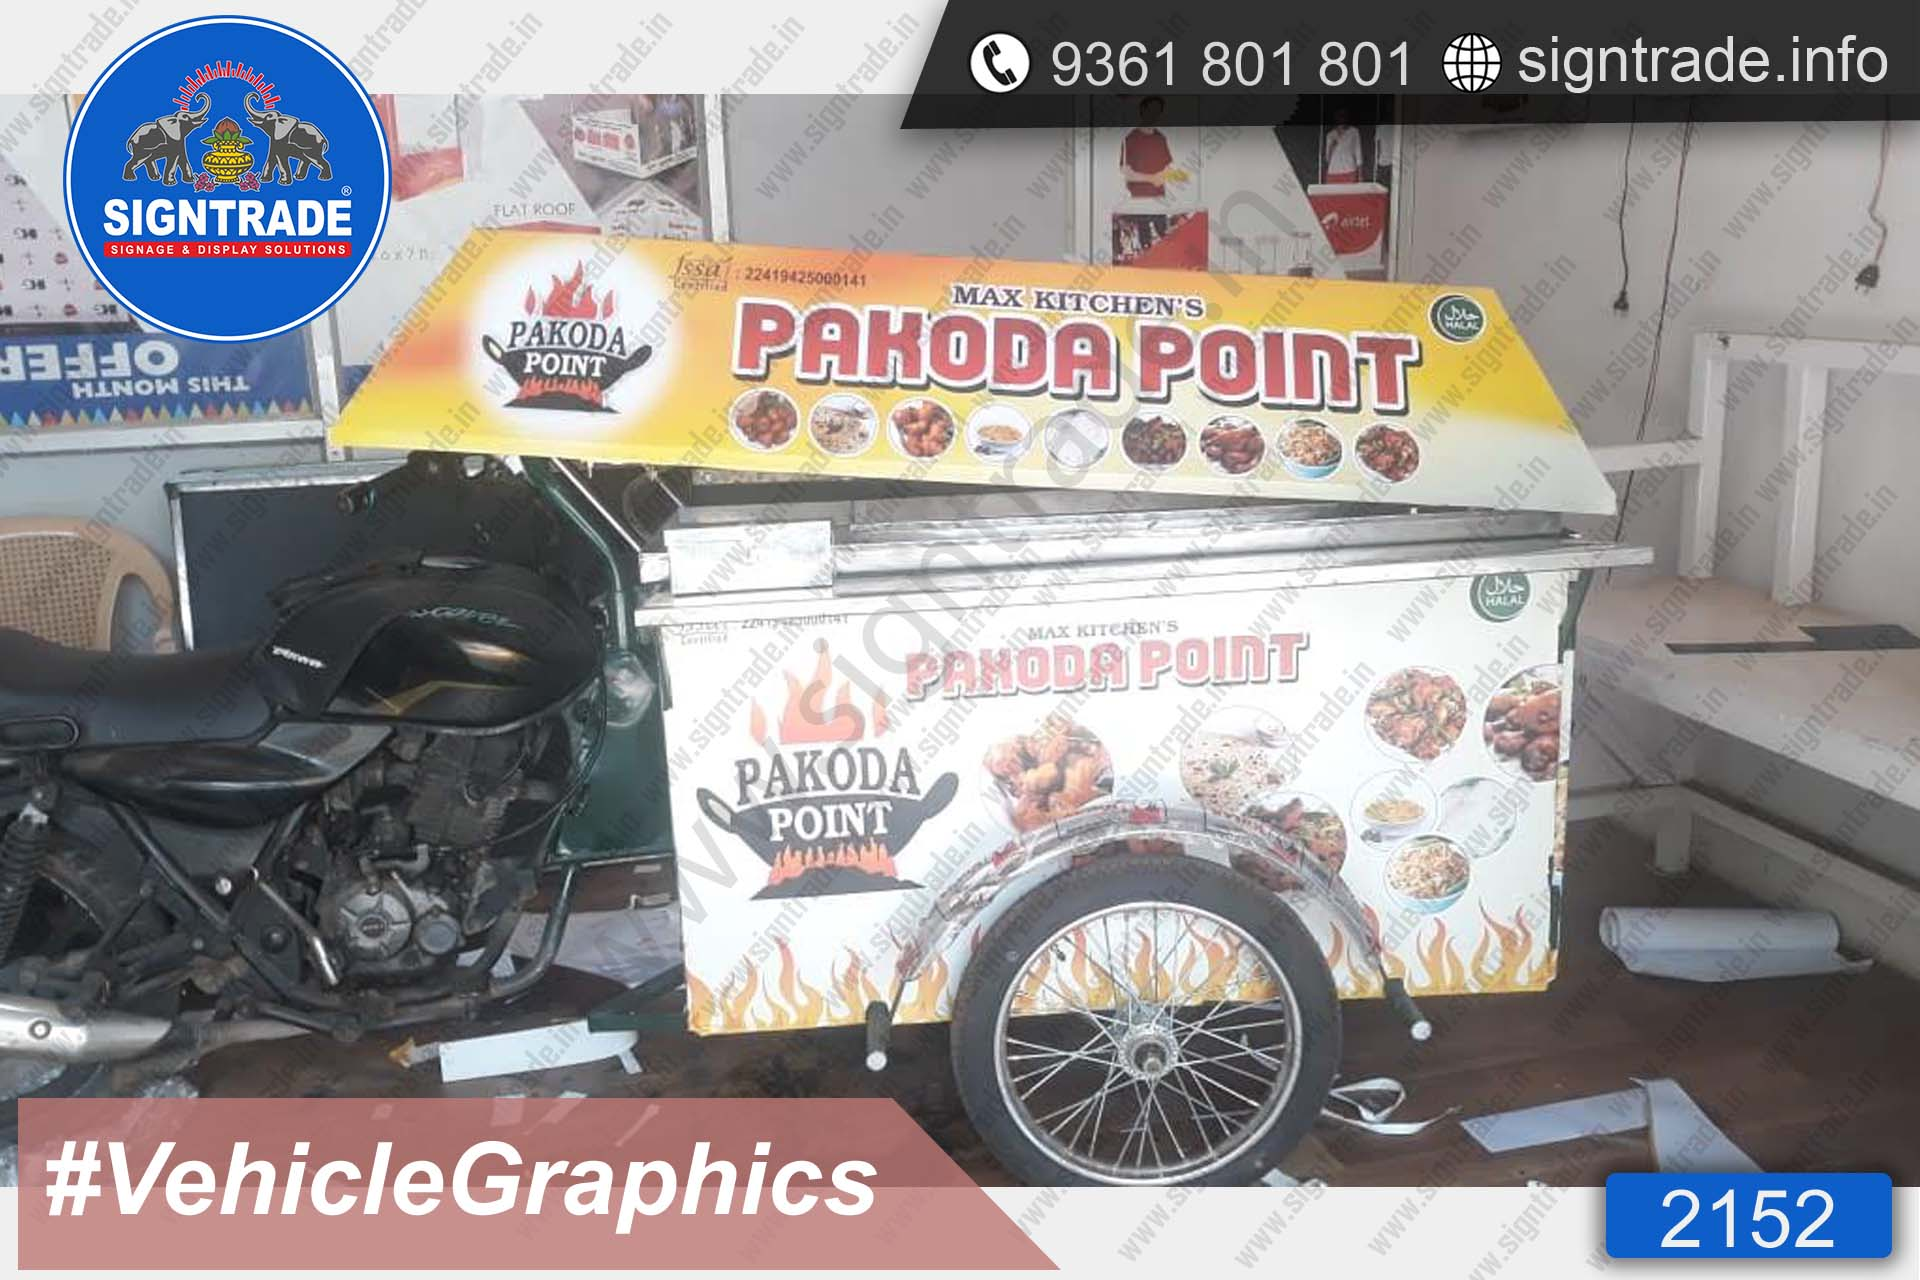 Pakoda Point vehicle graphics